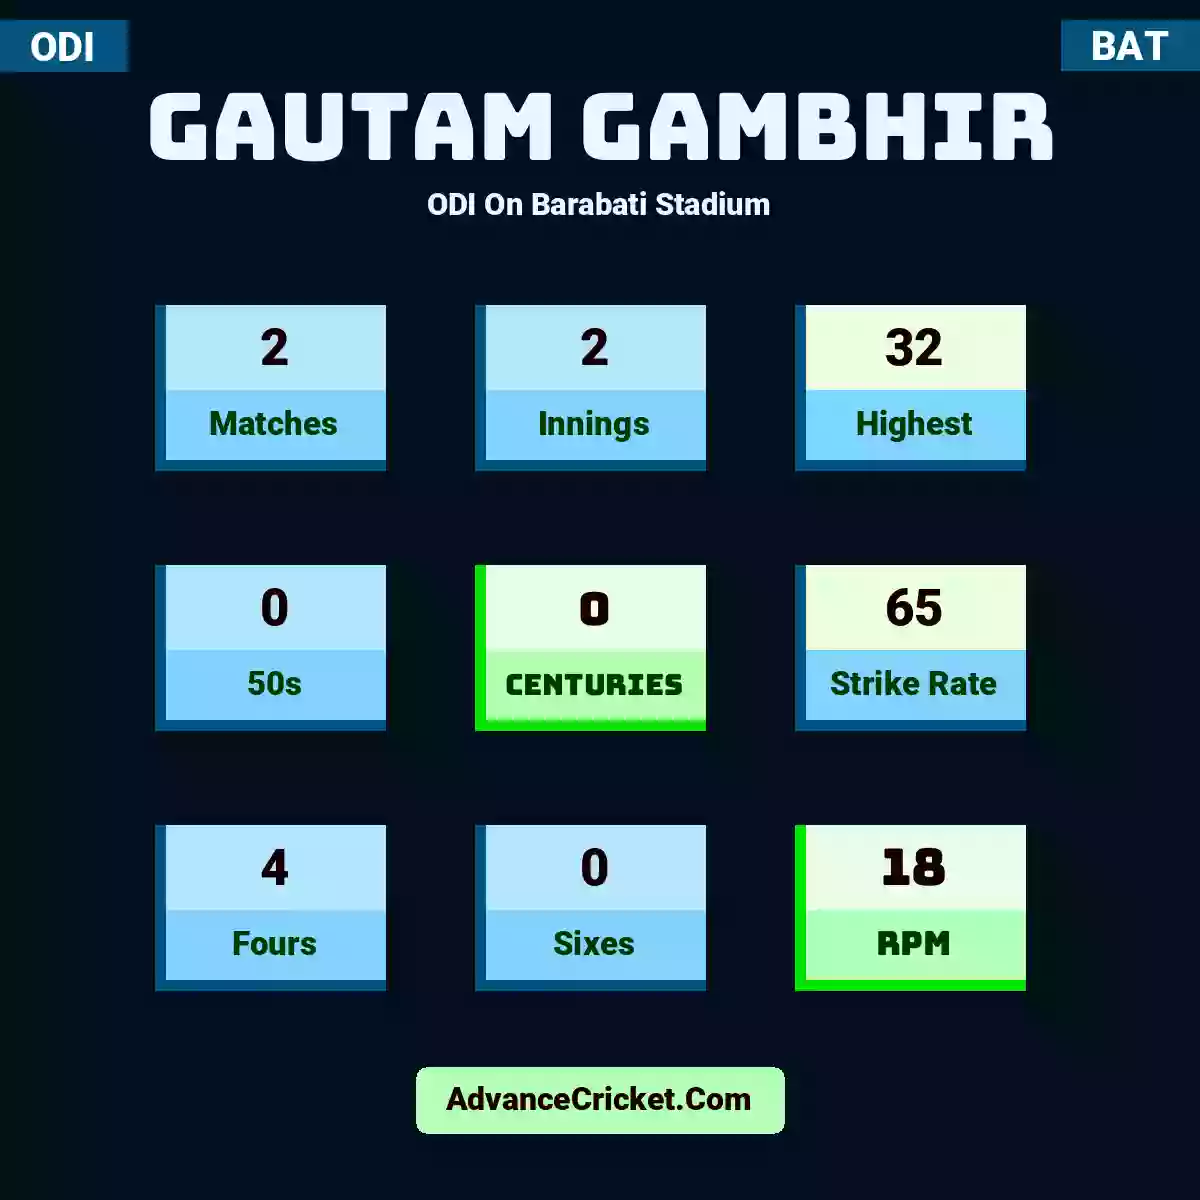 Gautam Gambhir ODI  On Barabati Stadium, Gautam Gambhir played 2 matches, scored 32 runs as highest, 0 half-centuries, and 0 centuries, with a strike rate of 65. G.Gambhir hit 4 fours and 0 sixes, with an RPM of 18.